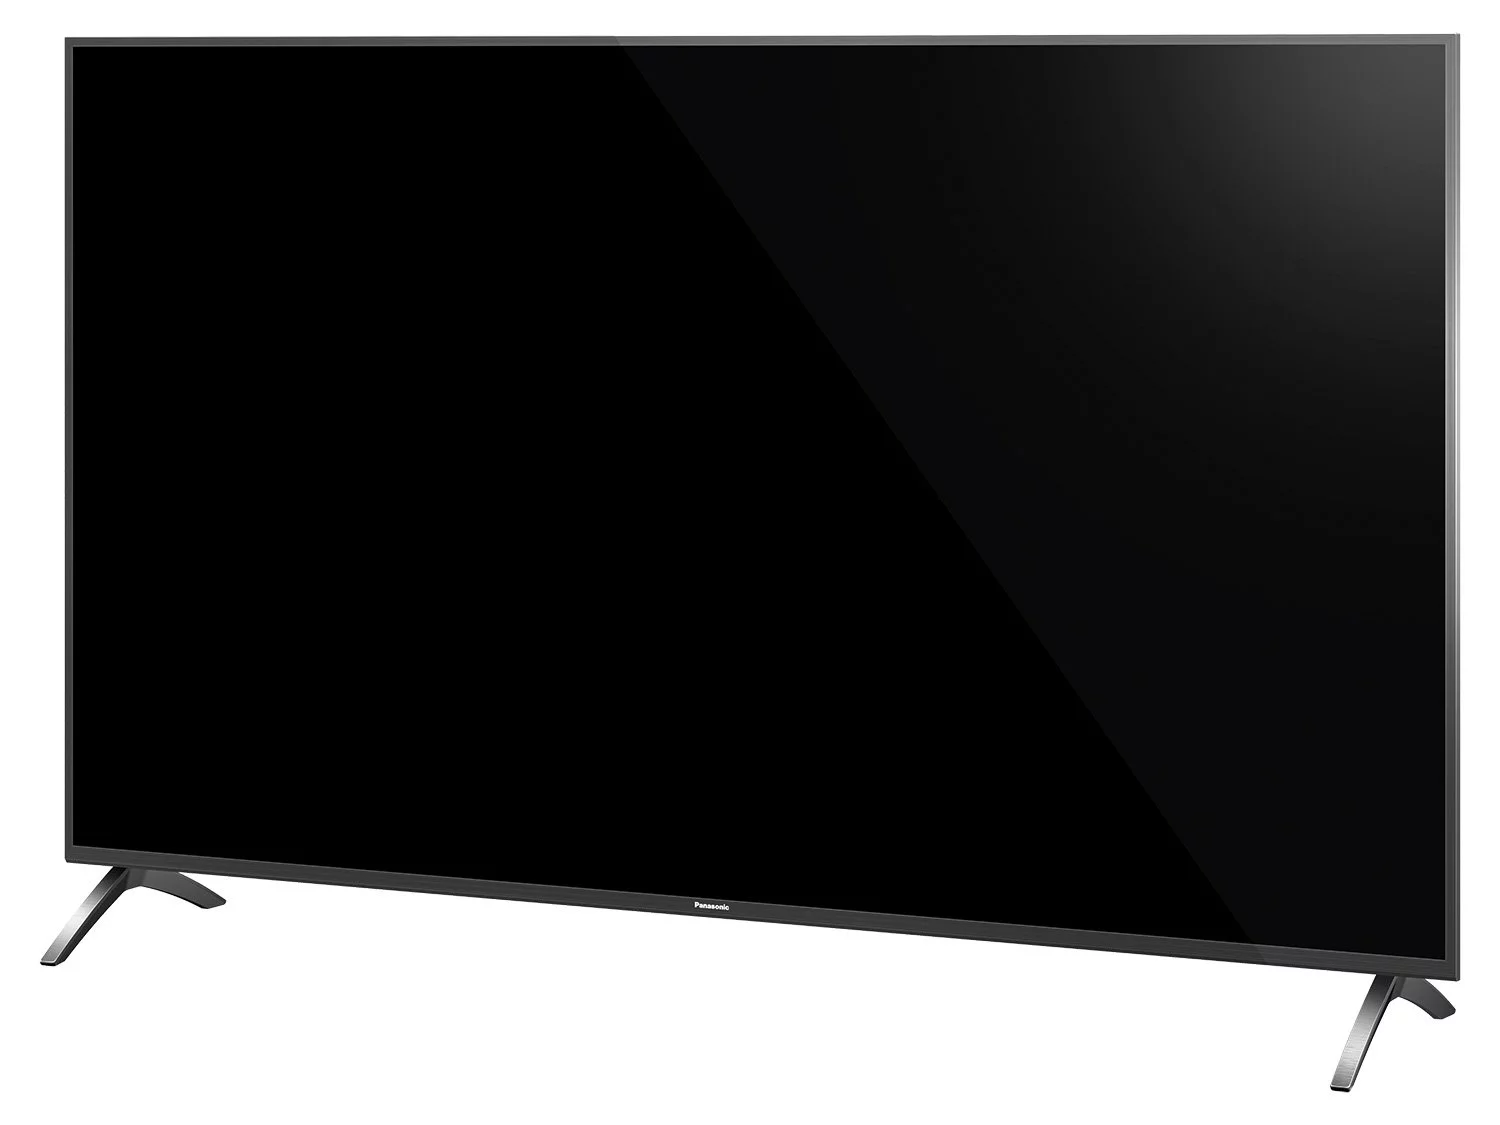 Panasonic LED TV FX700